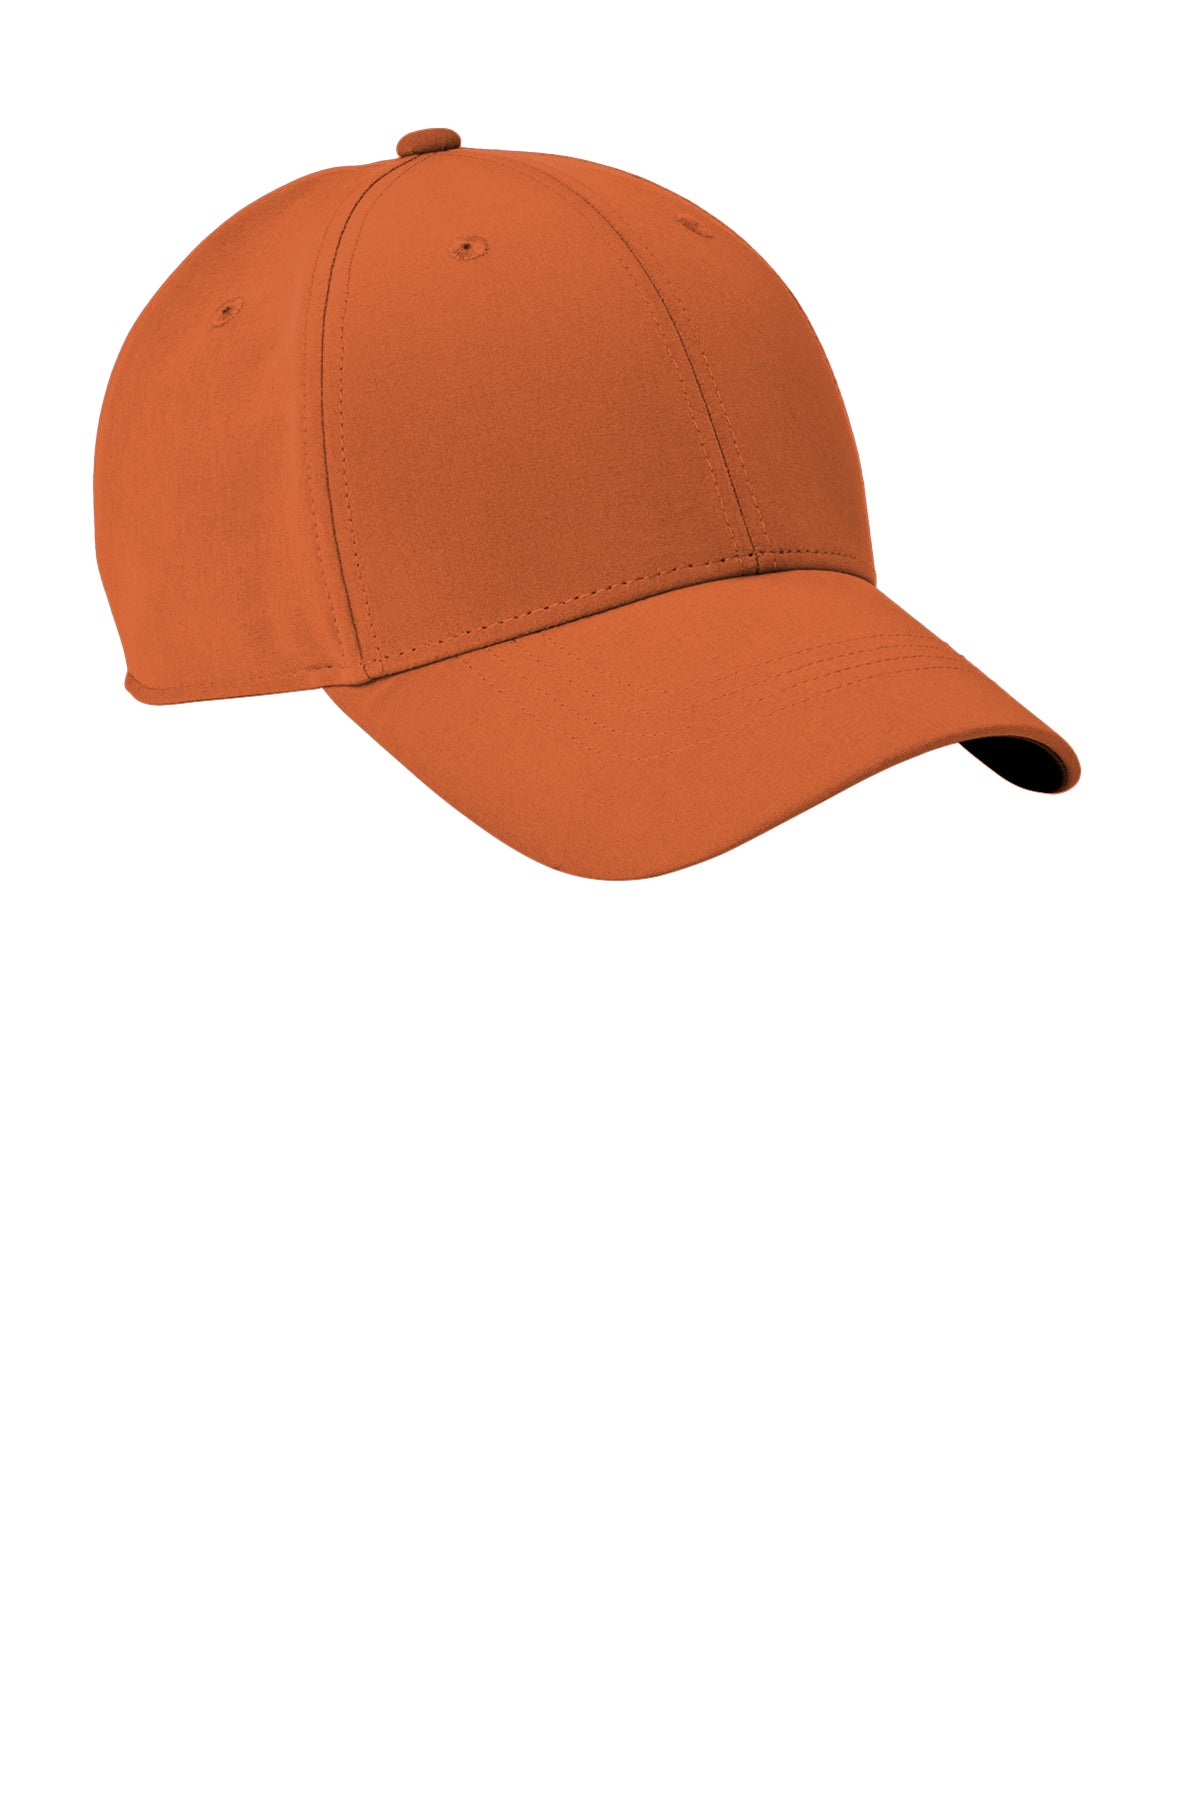 Nike Dri-FIT Legacy Custom Caps, Desert Orange